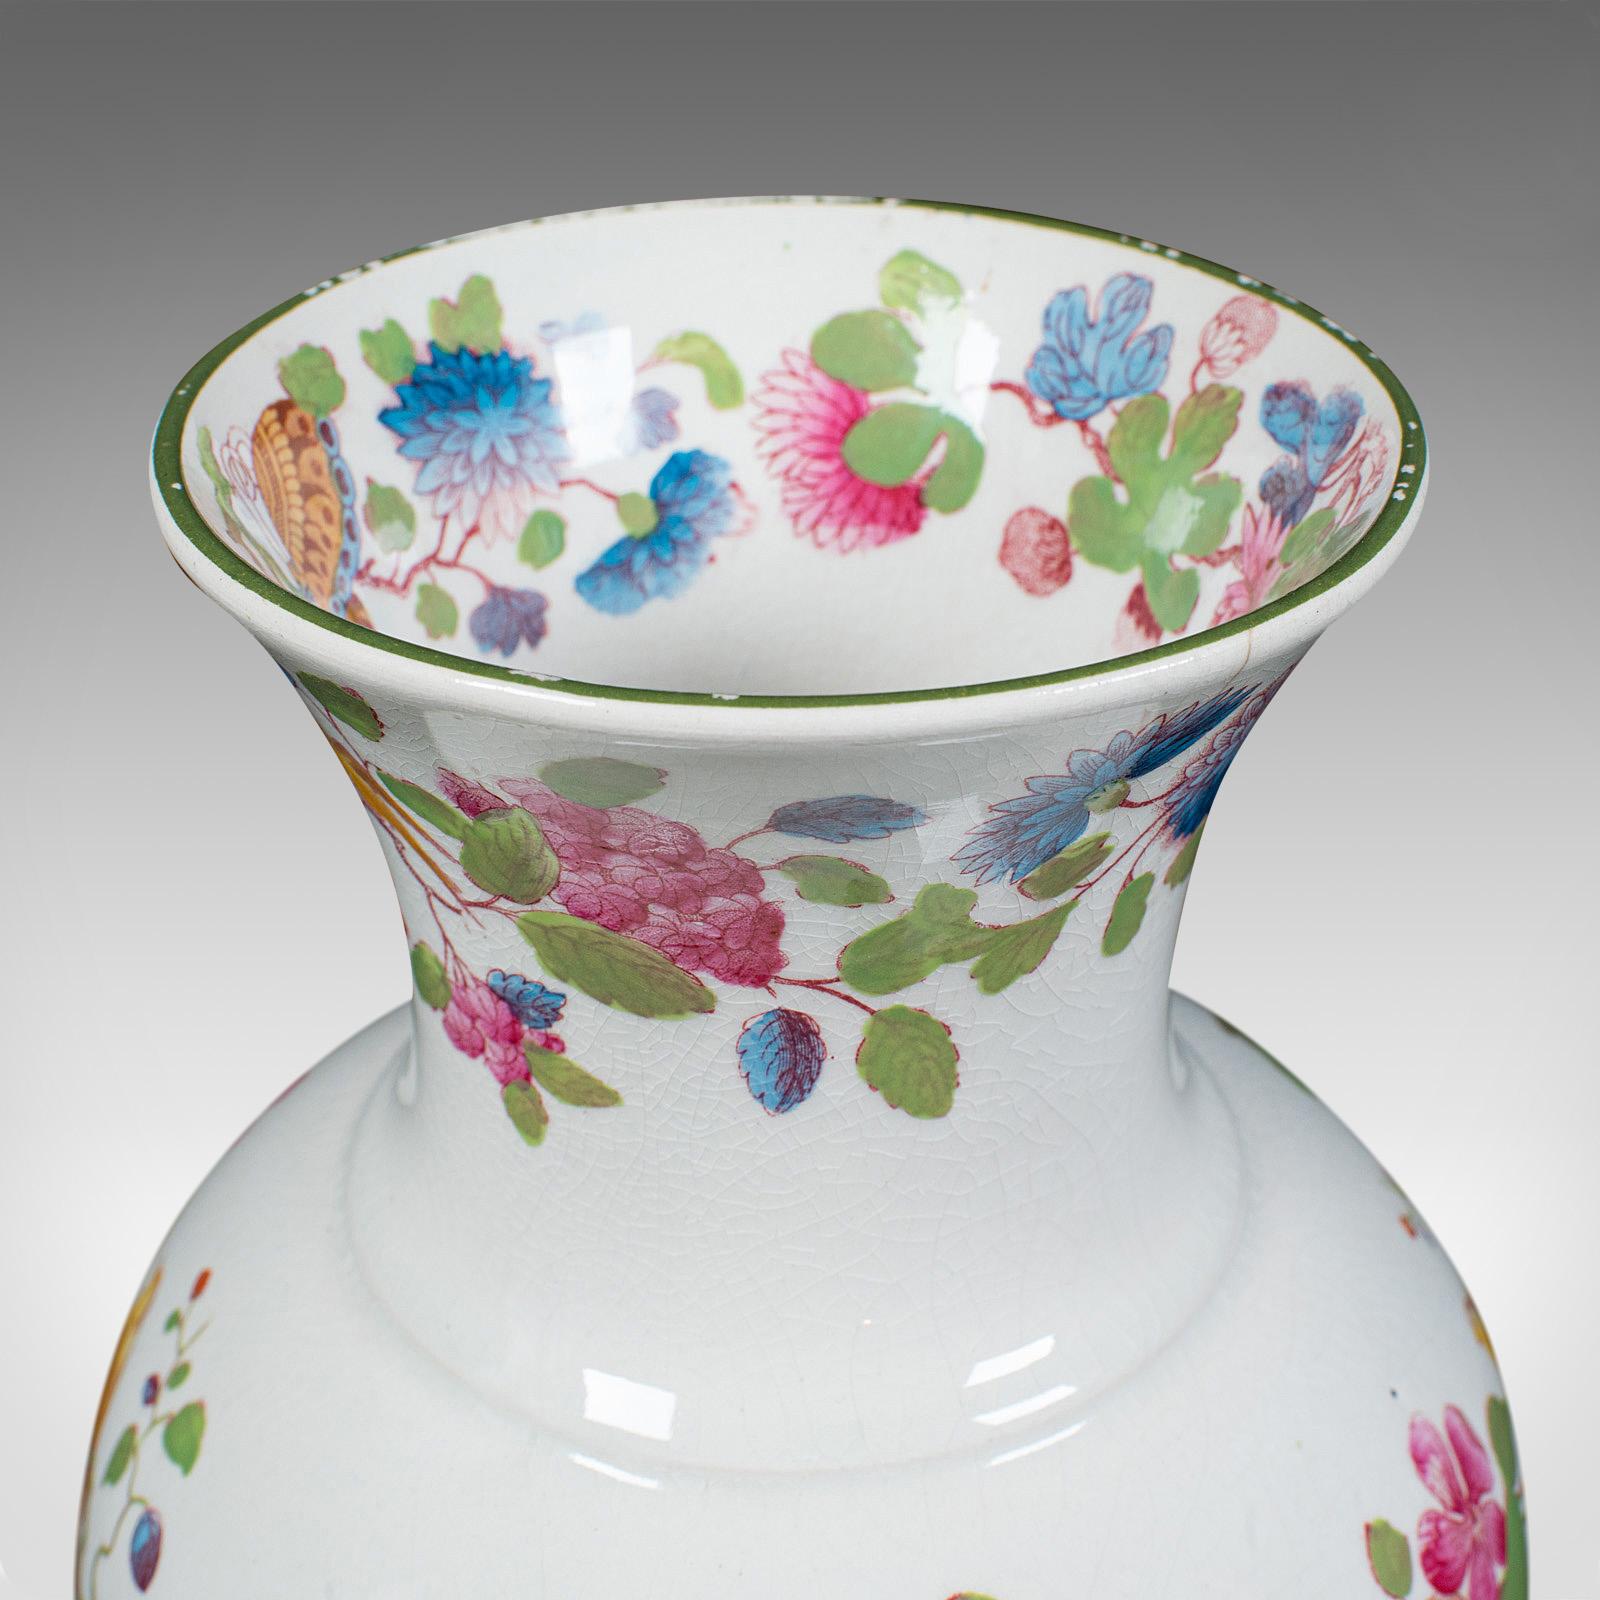 Antique Baluster Posy Vase, English, Ceramic, Decorative, Flower Urn, Circa 1920 For Sale 3